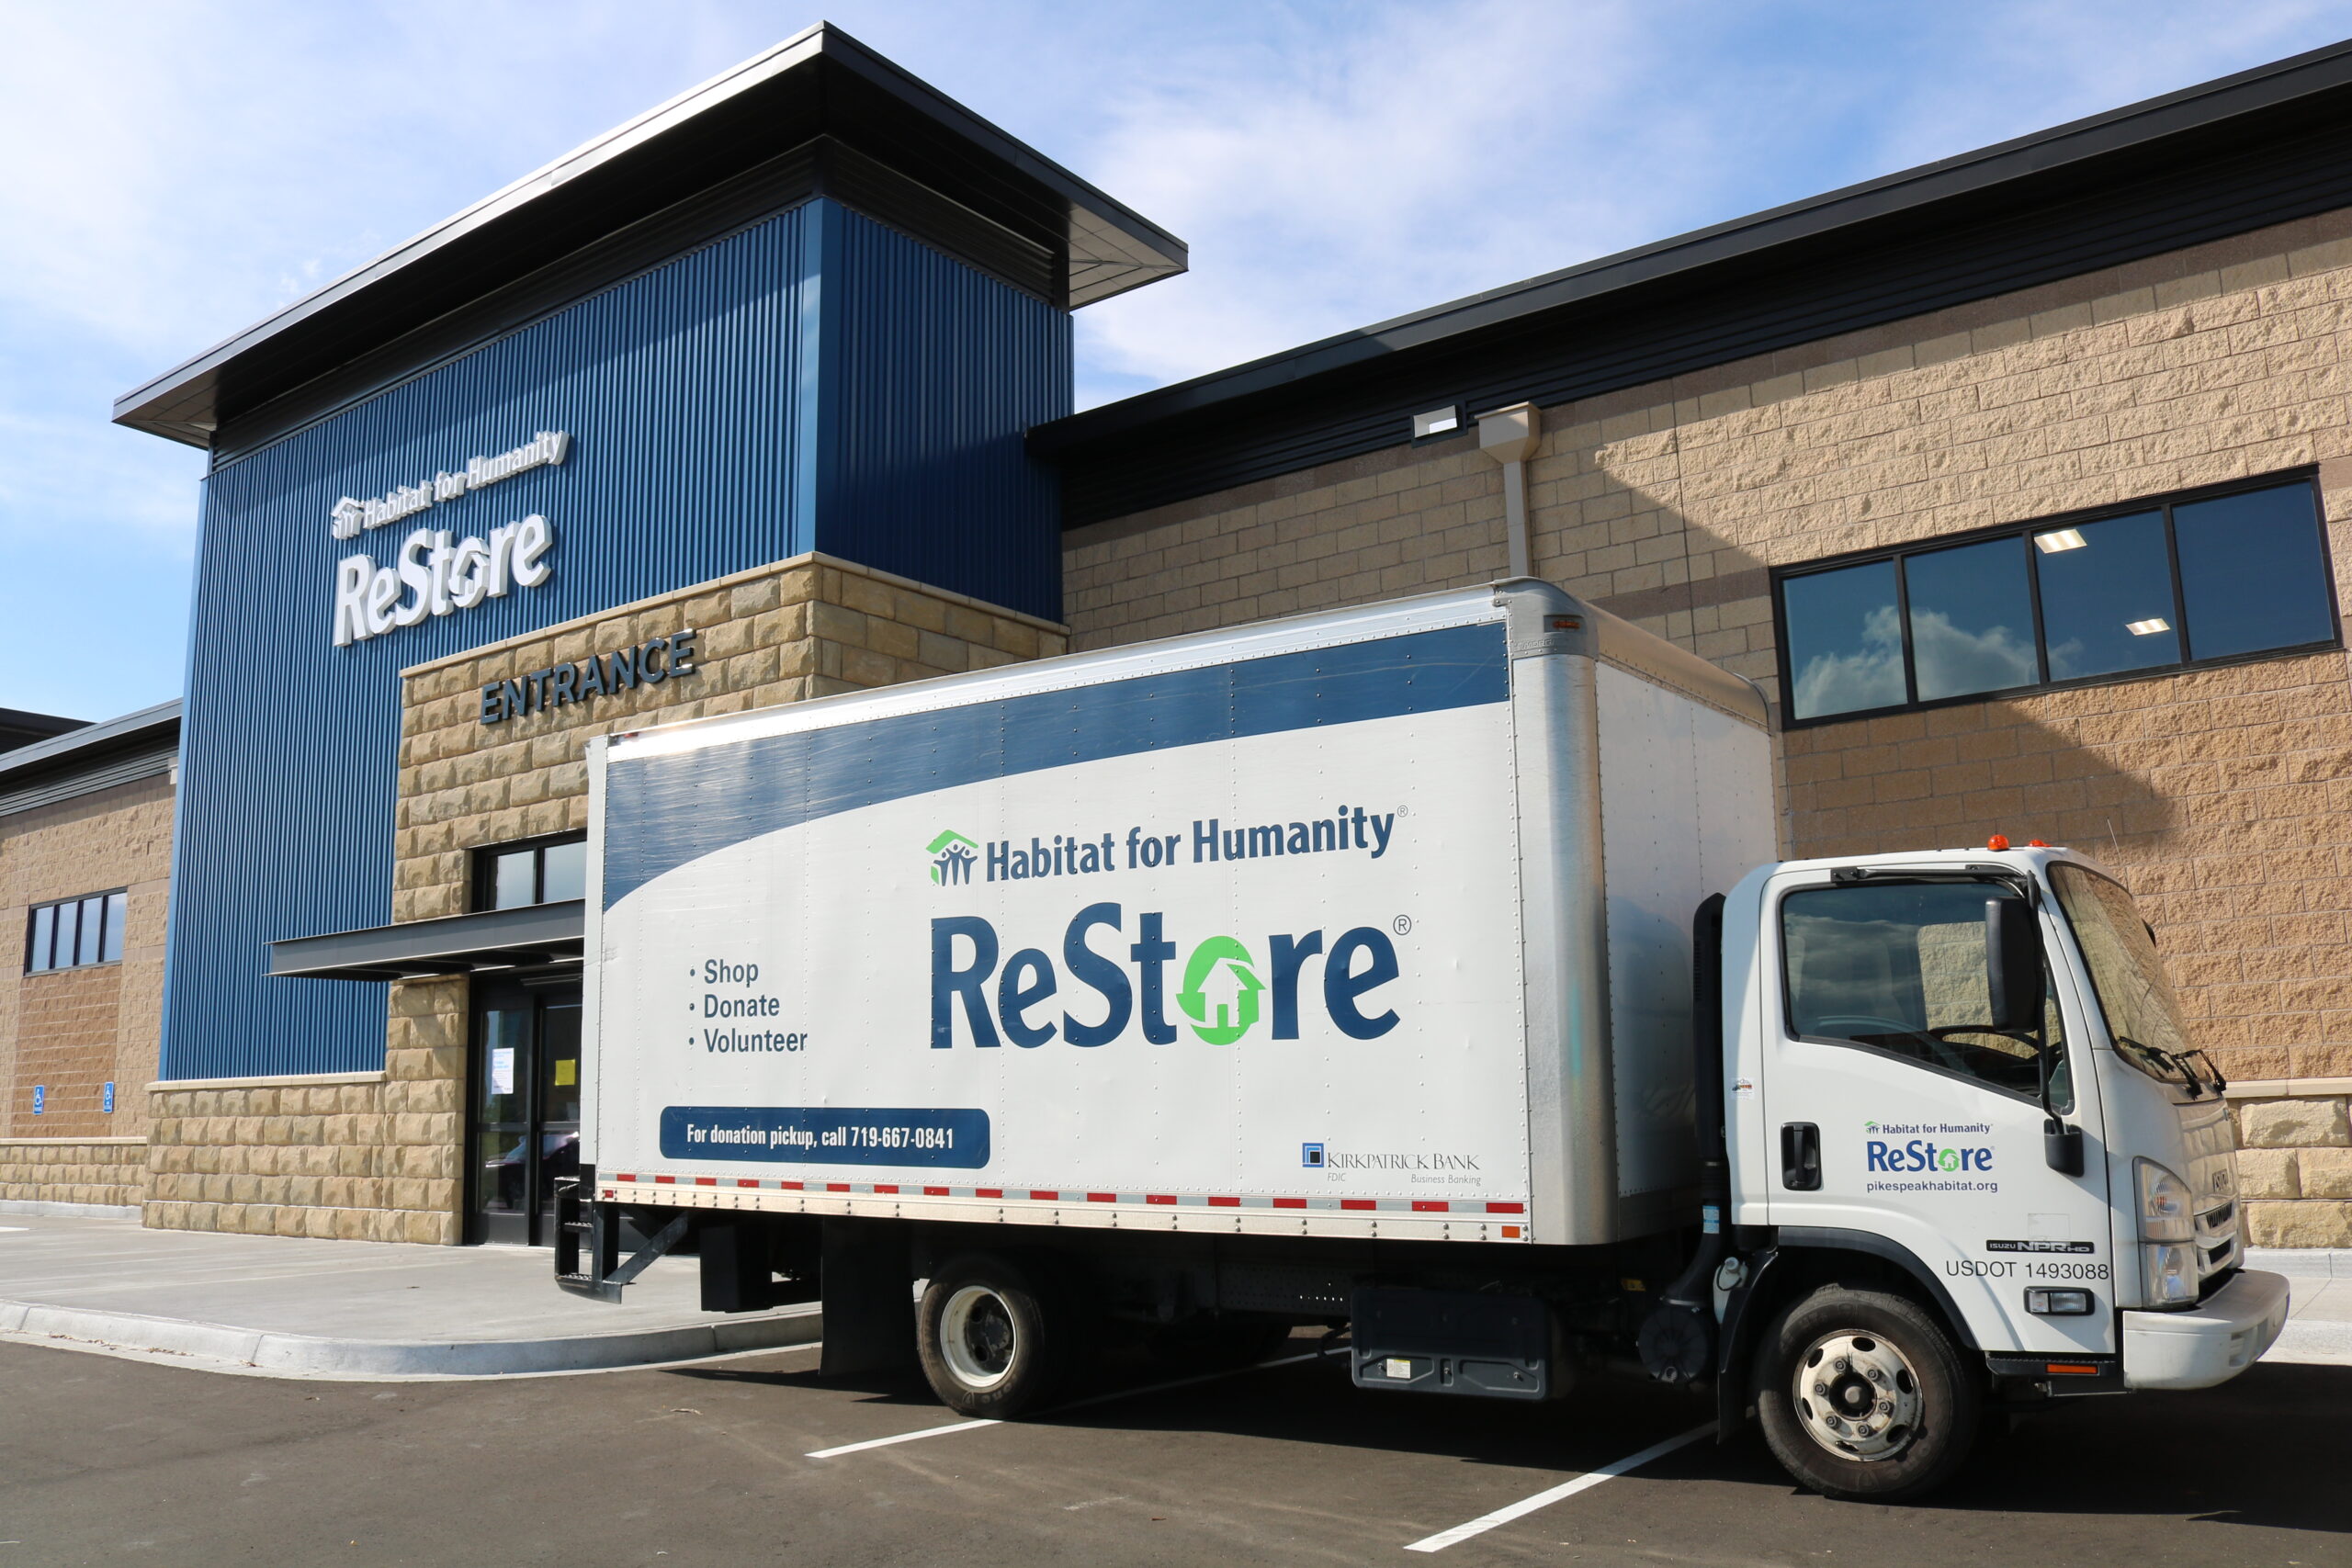 ReStore truck in front of northeast location